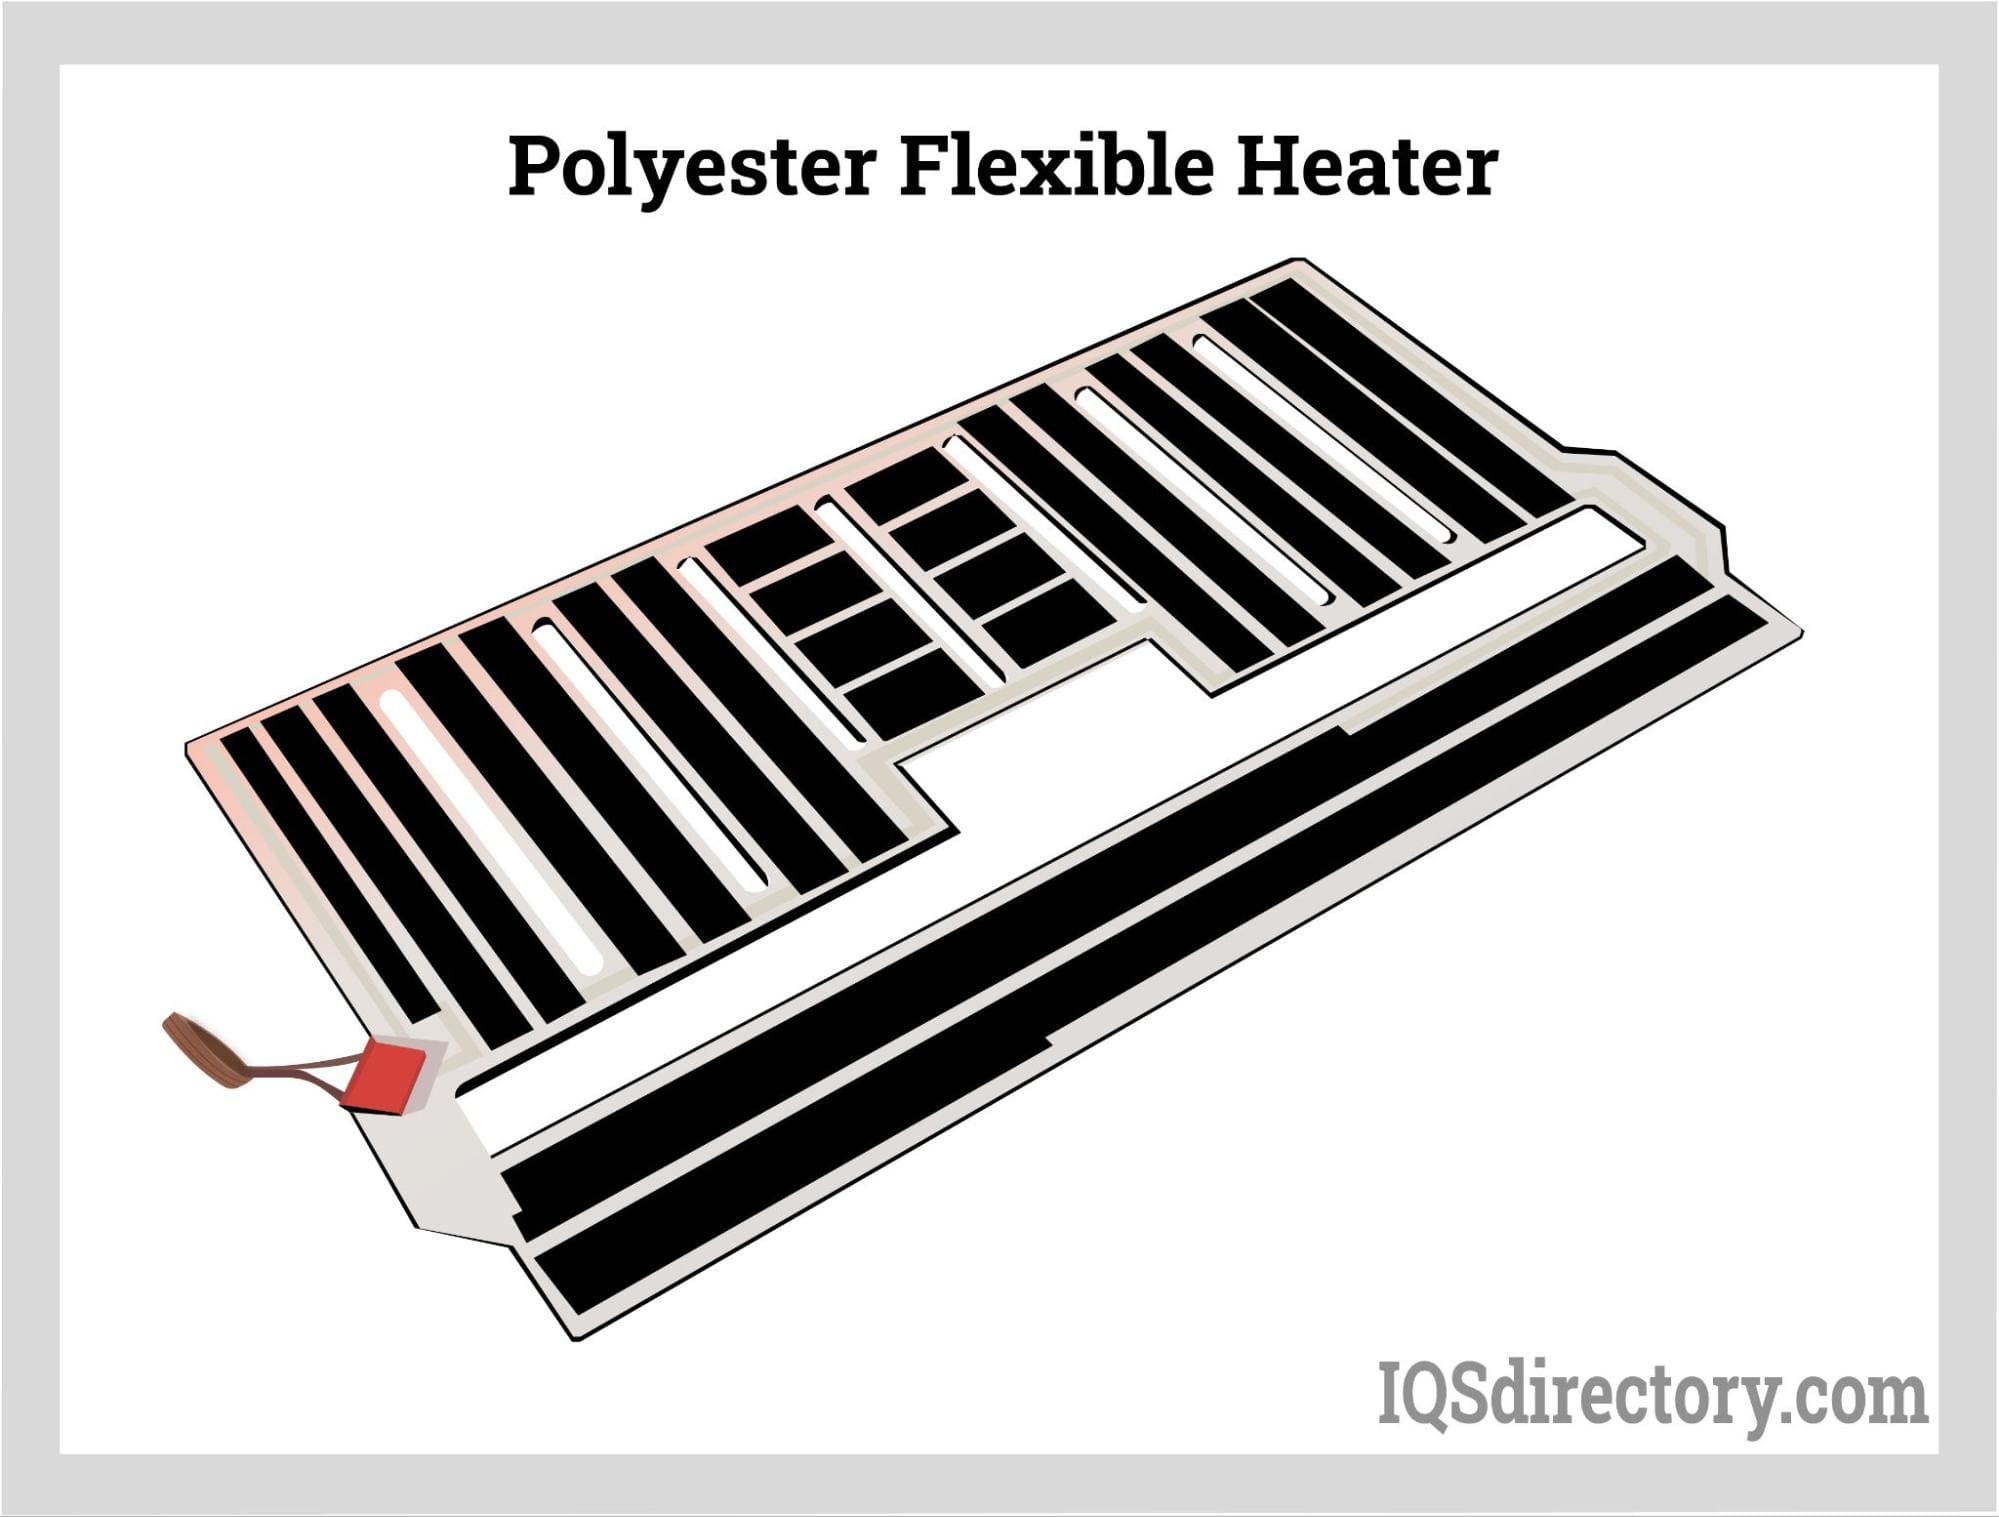 Polyester Flexible Heater